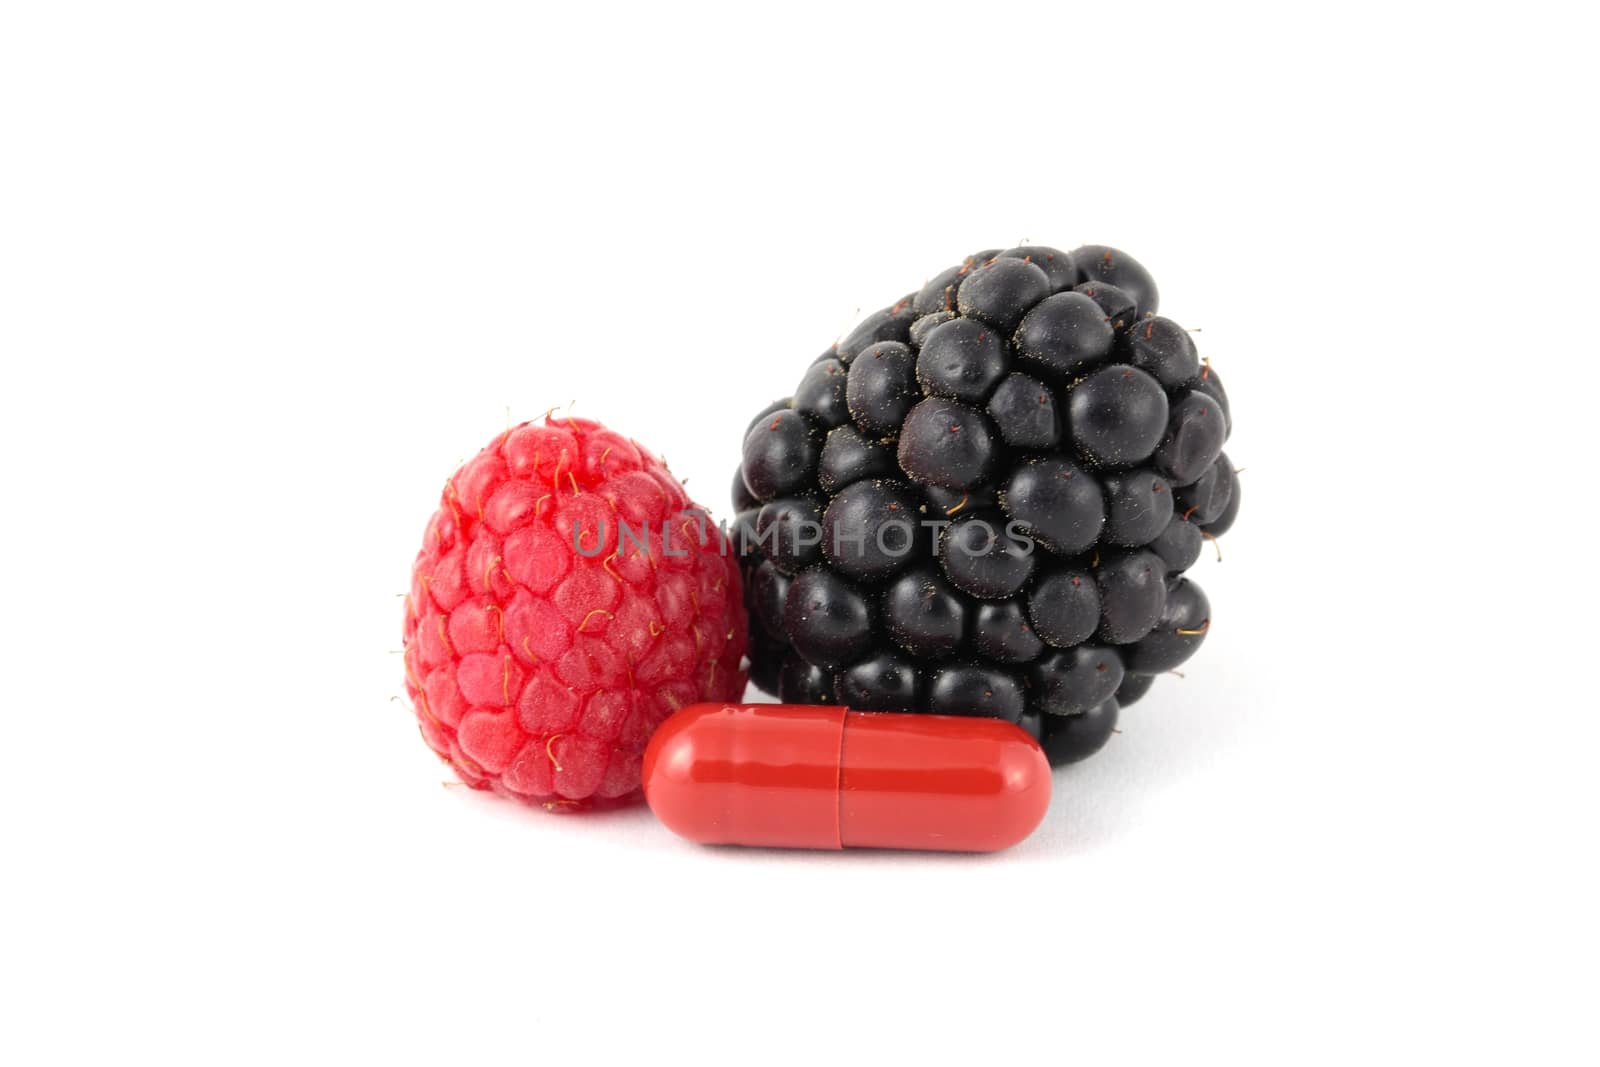 Rasp- and Blackberries with Medicine